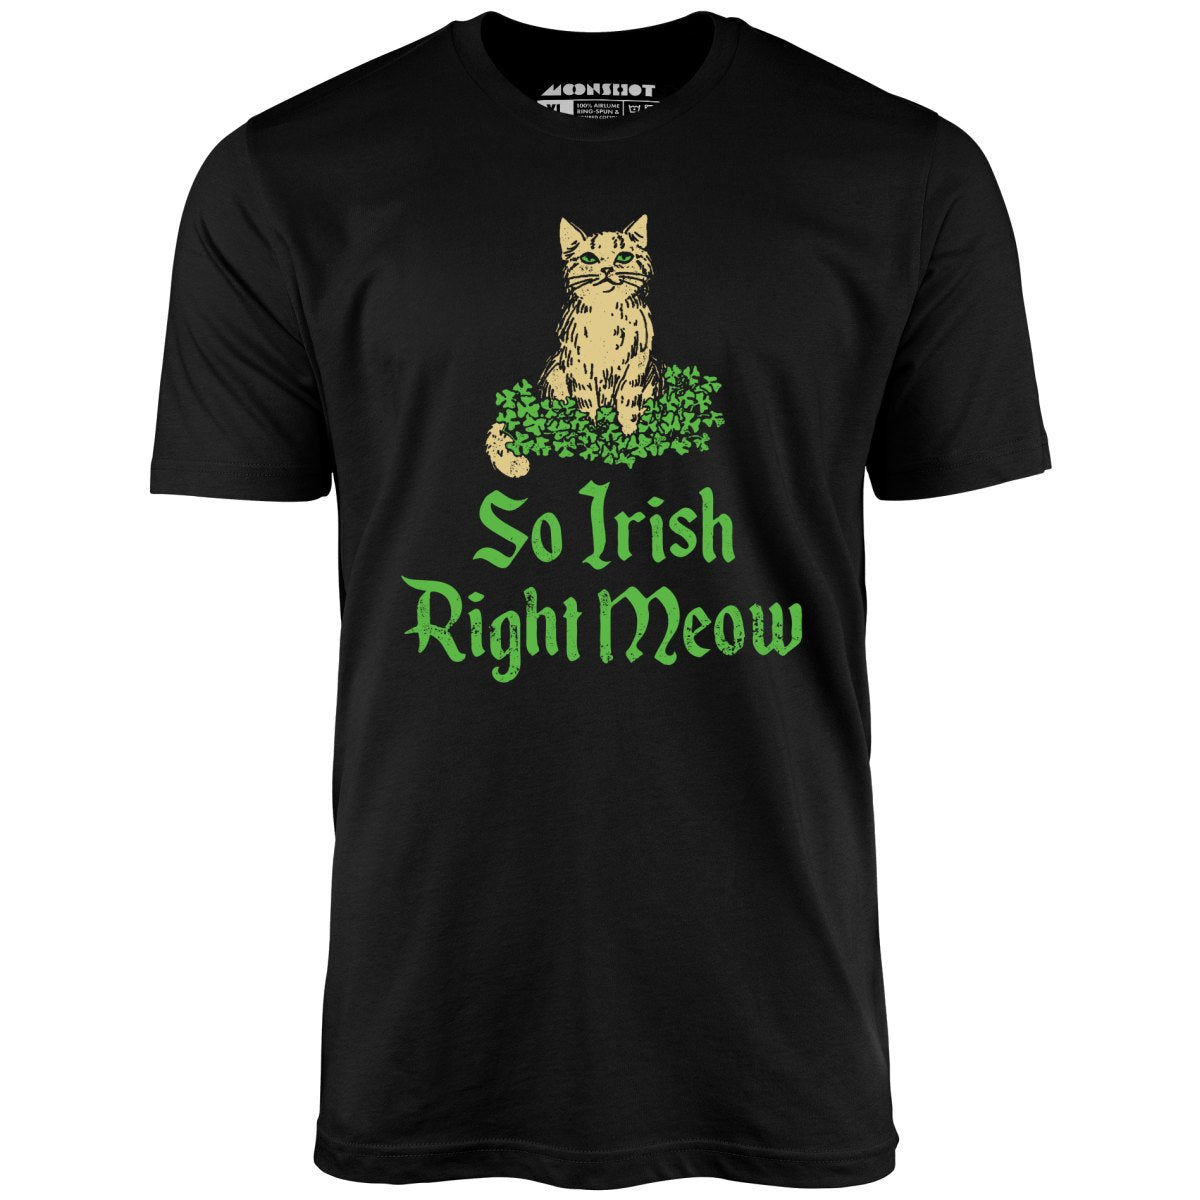 So Irish Right Meow - Unisex T-Shirt